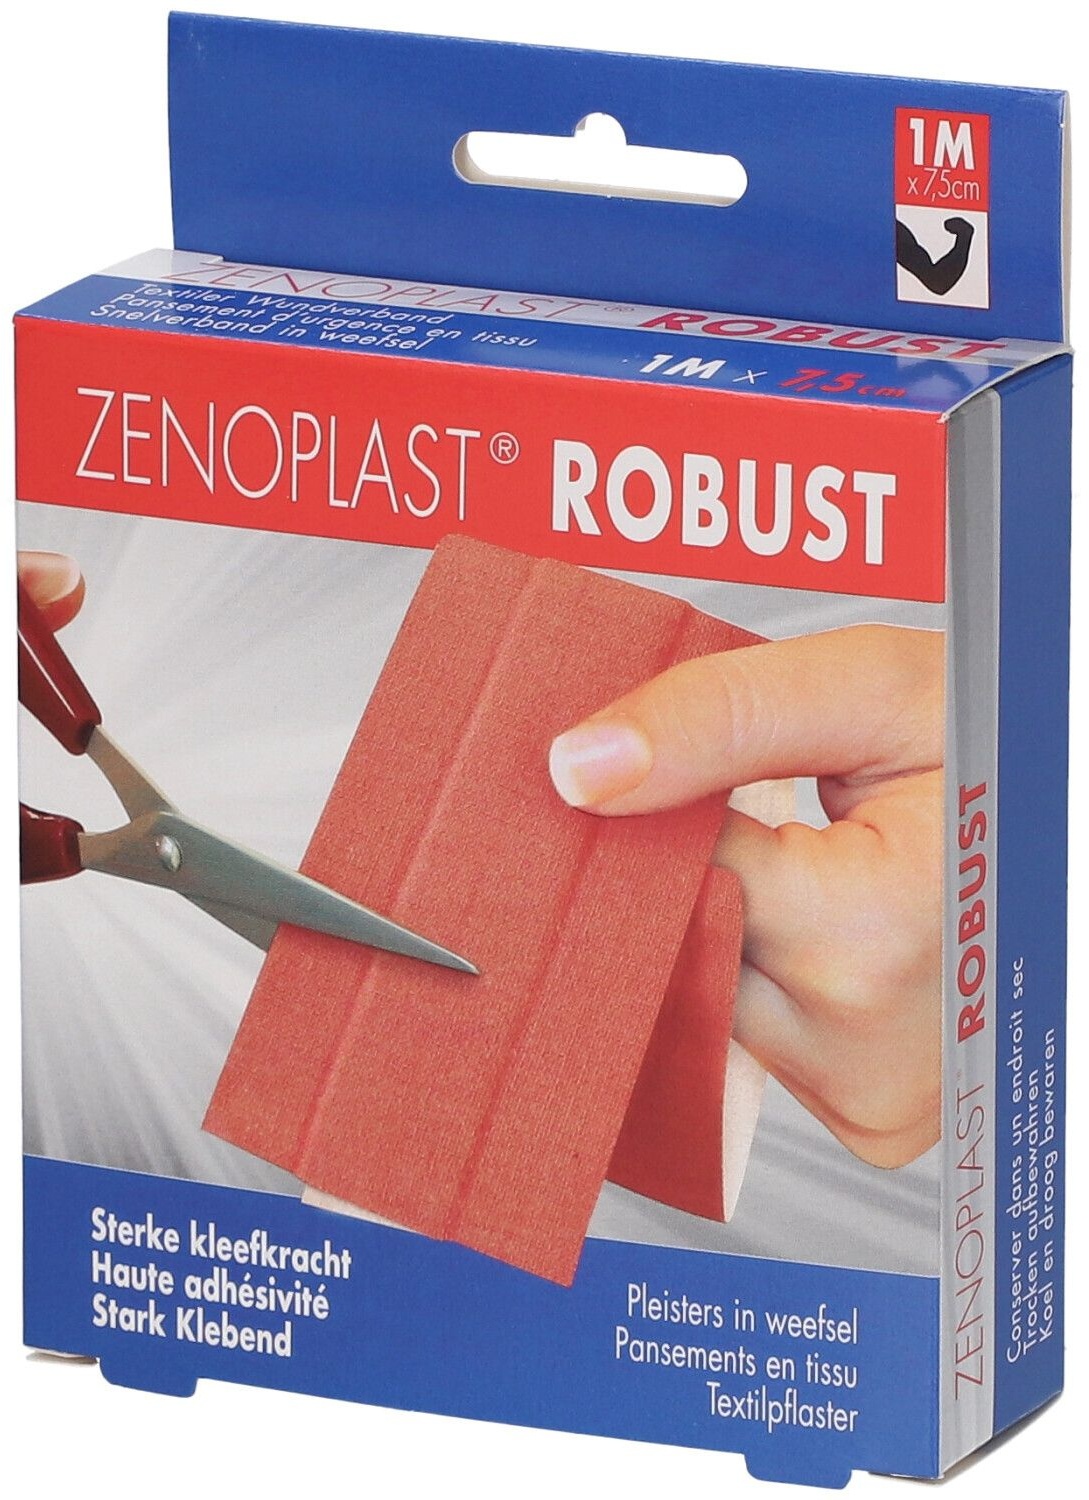 Zenoplast Robust 7.5cm x 1m 1 pc(s) pansement(s)